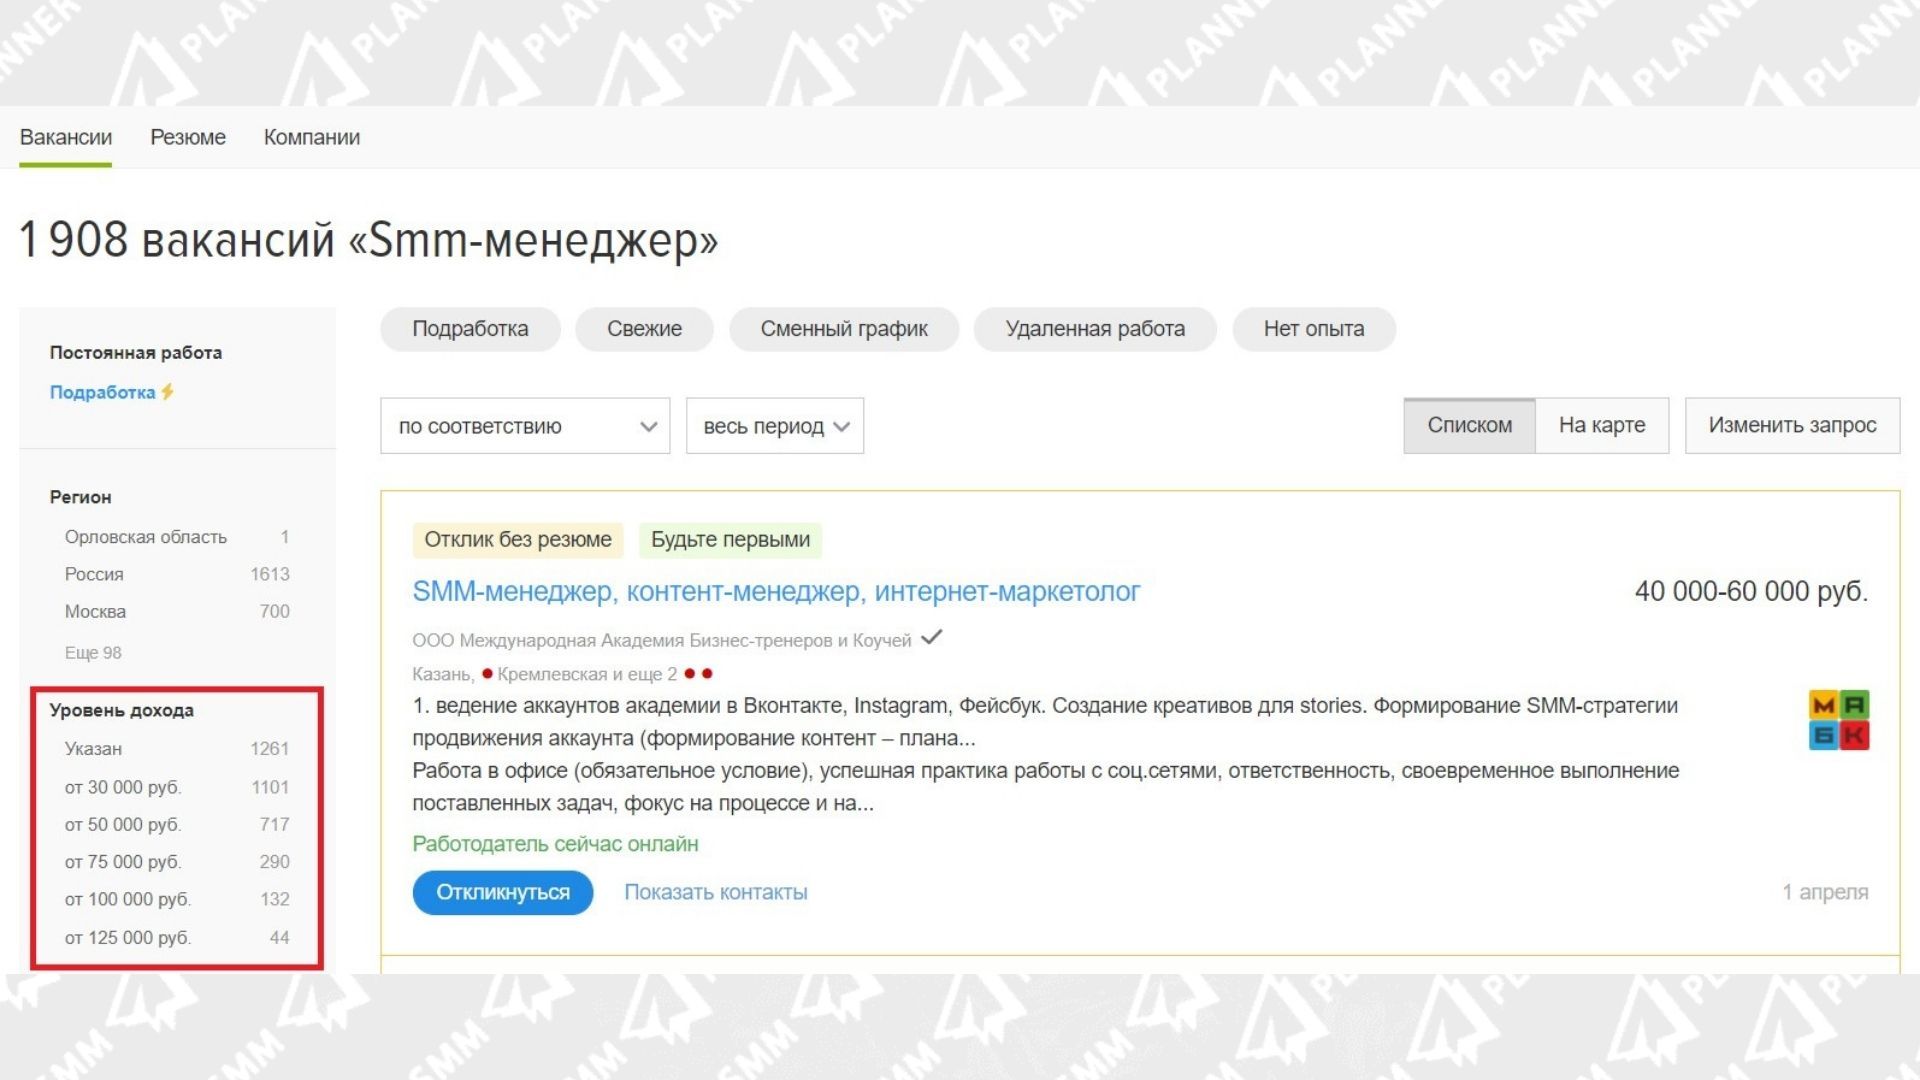 Средняя зарплата SMM-менеджера по данным www.hh.ru